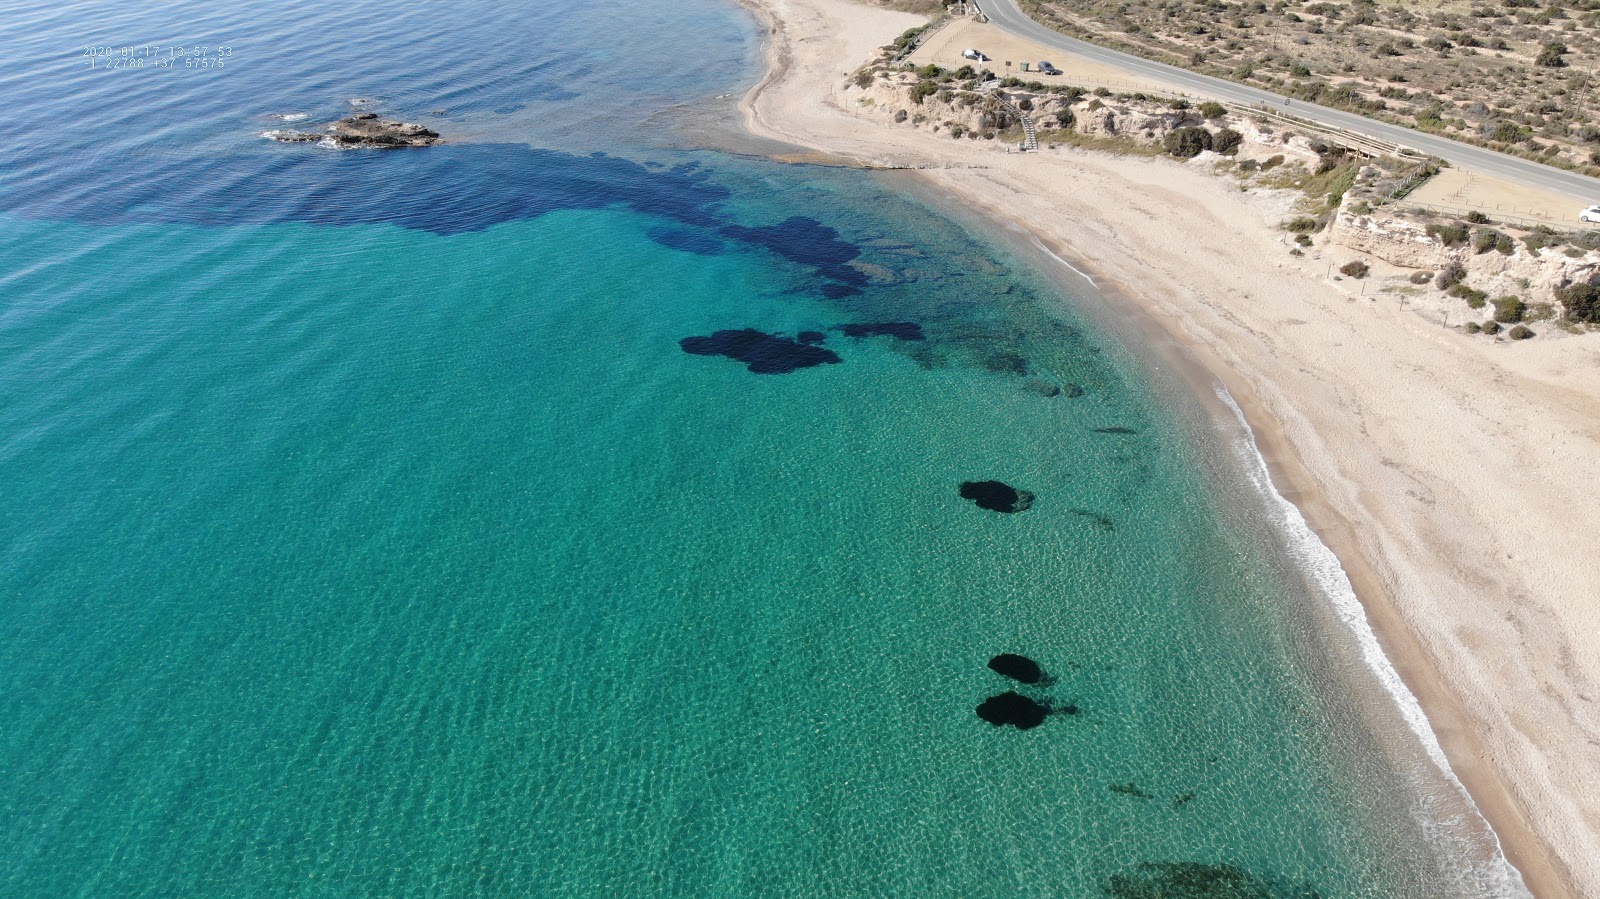 Foto von Playa de el Mojon mit türkisfarbenes wasser Oberfläche